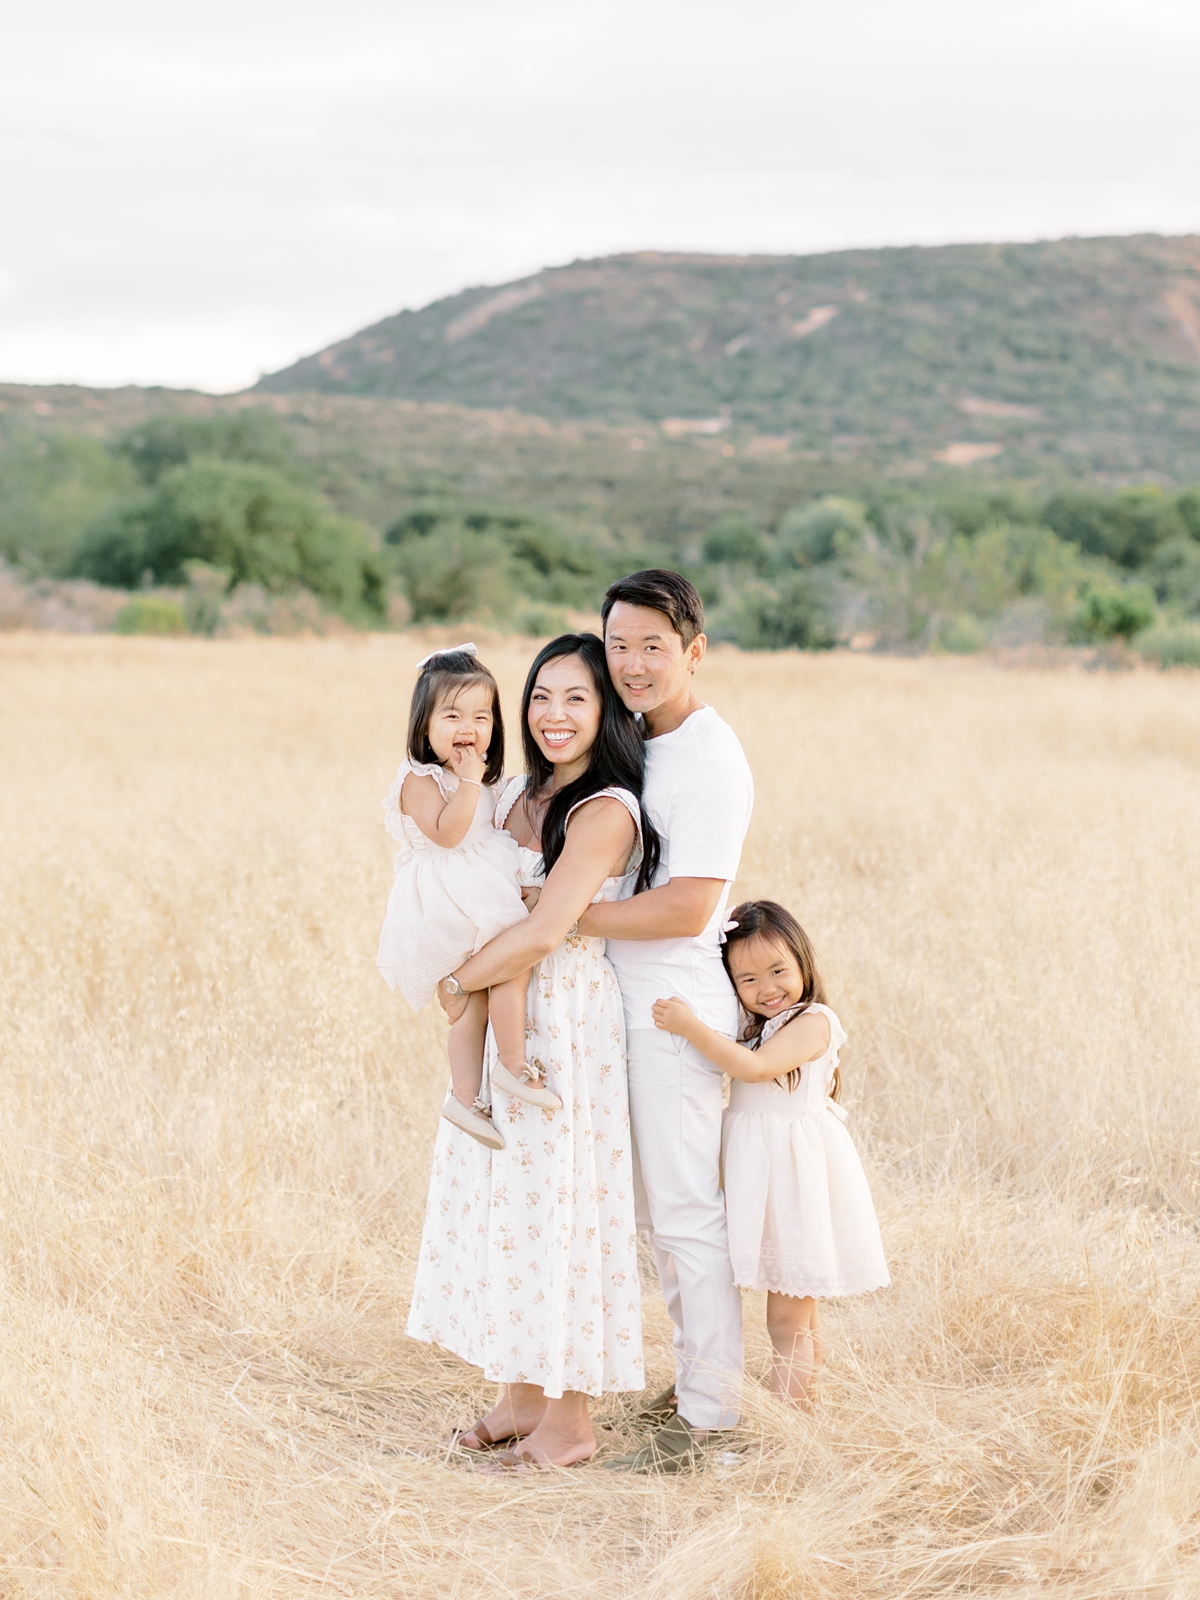 Carlsbad Family Portraits - San Diego Photographer Jade Maria Photography